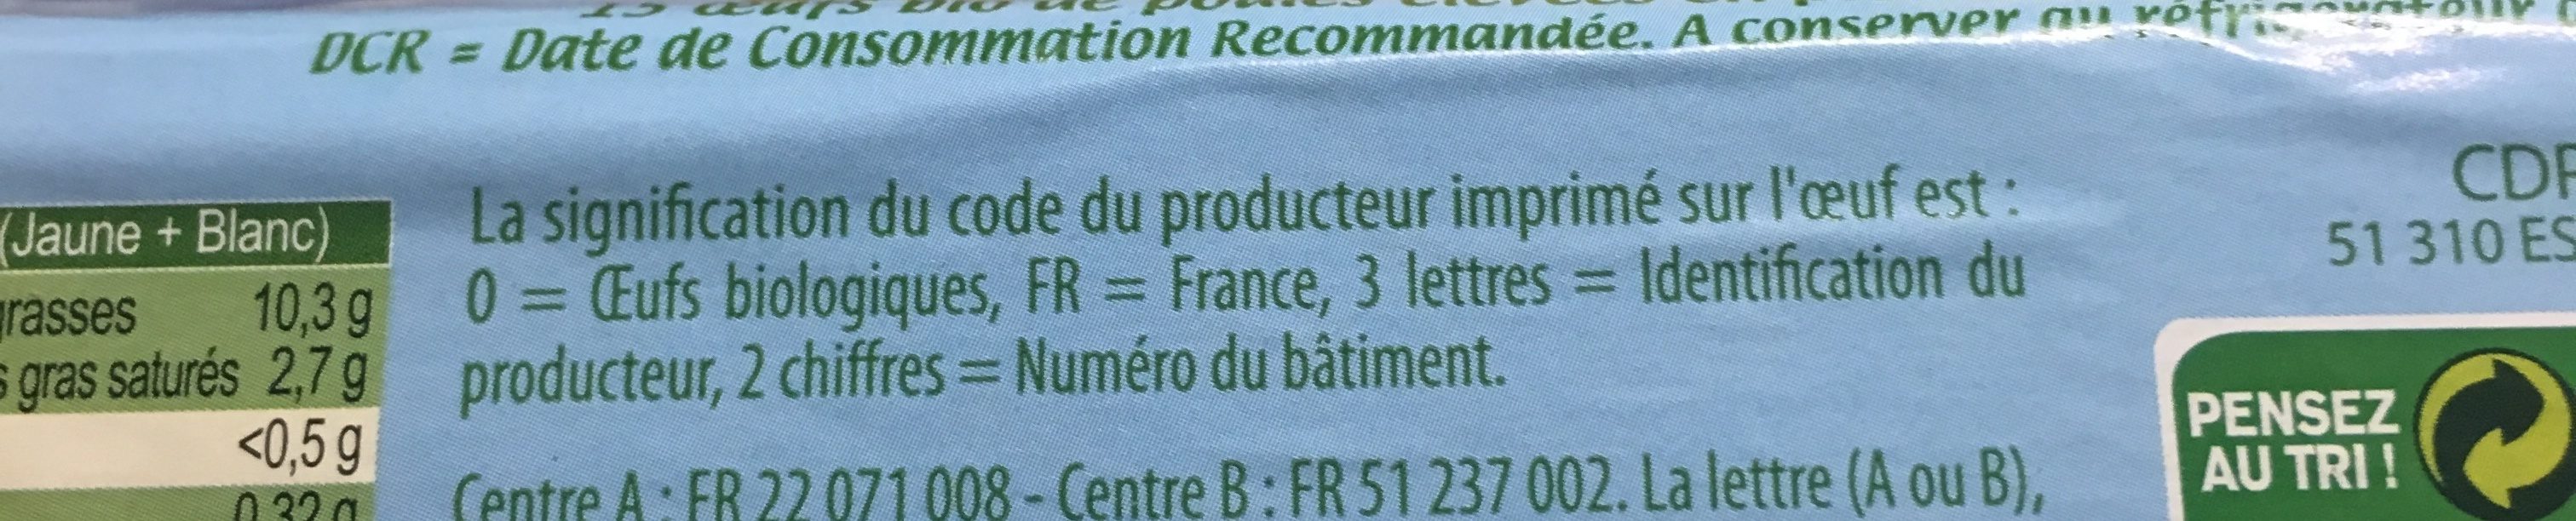 Oeufs bio - Ingredients - fr